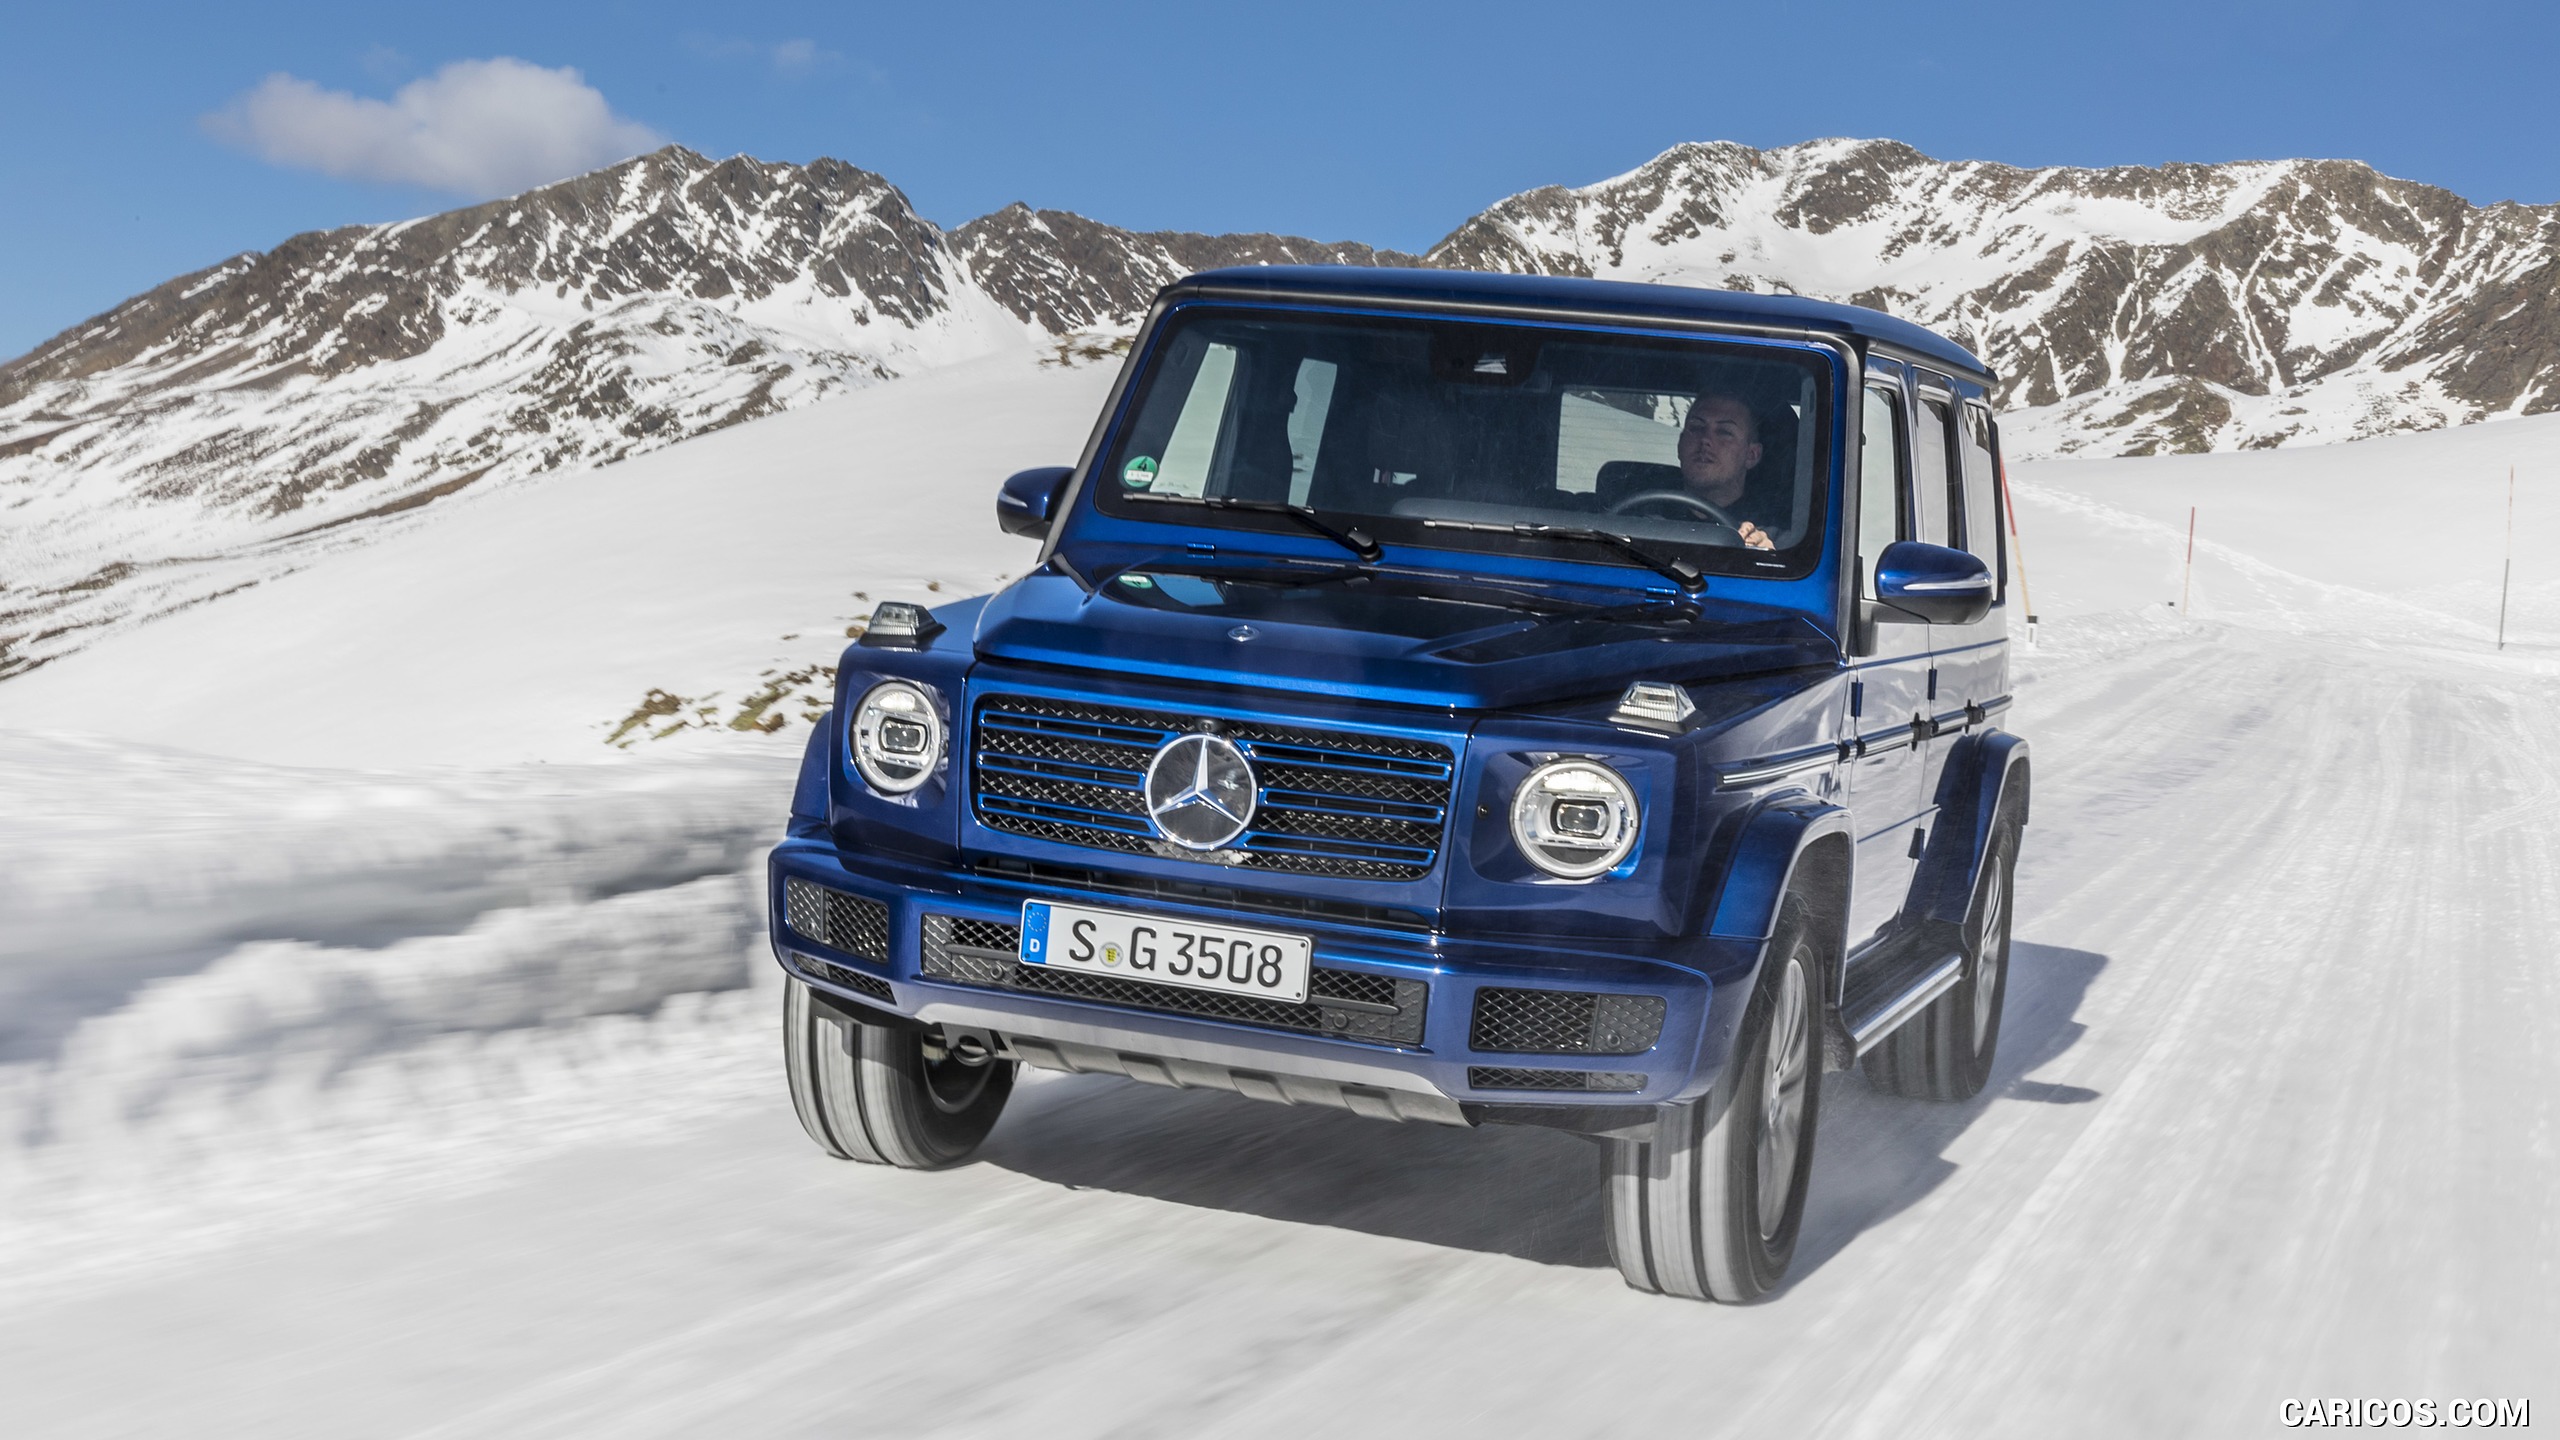 2019 Mercedes-Benz G 350 d (Brilliant Blue Metallic) - In Snow - Front, #29 of 51